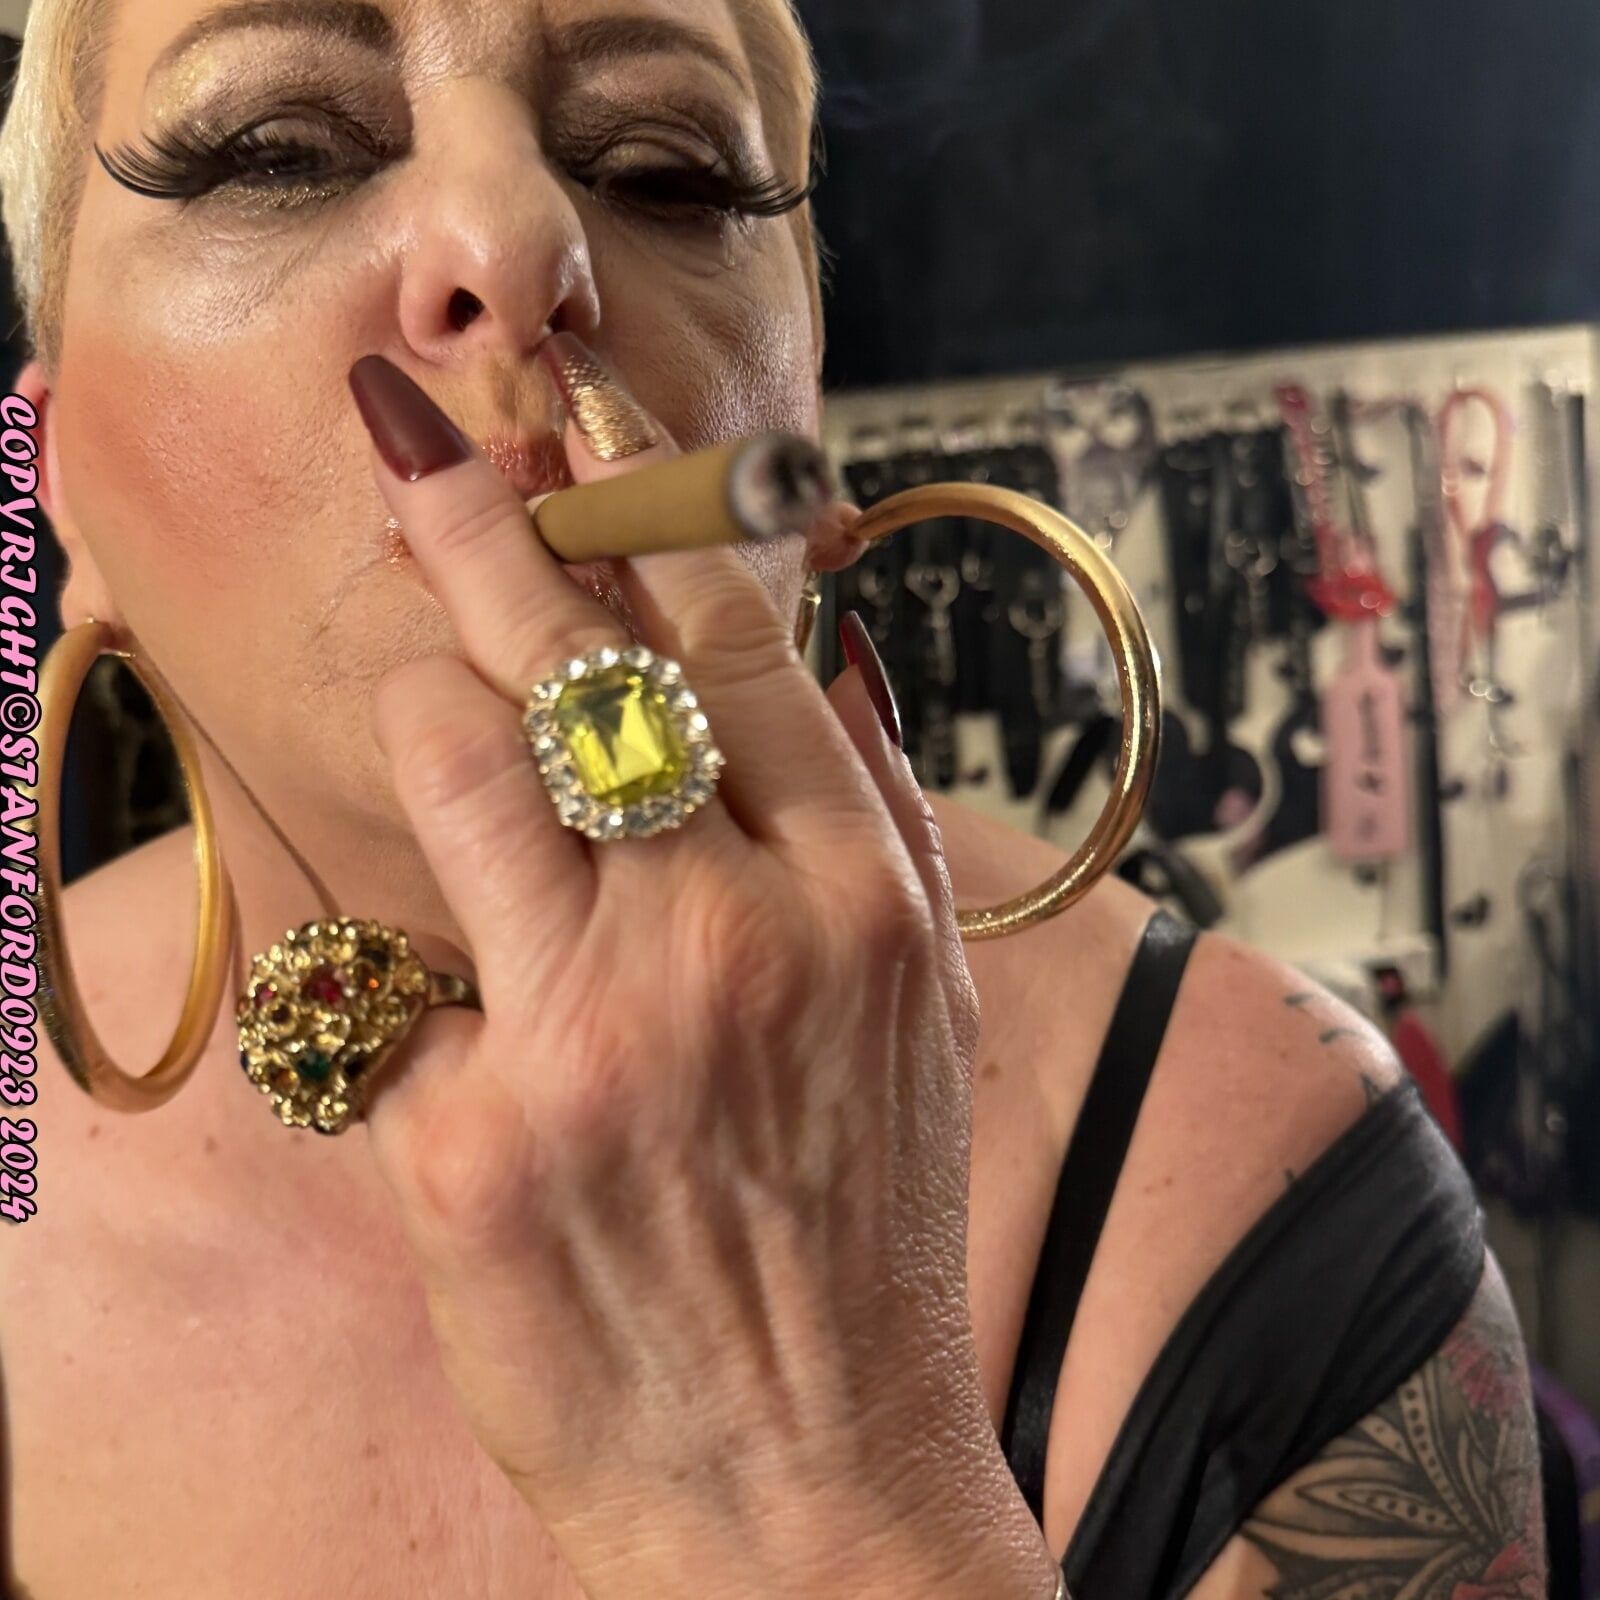 SMOKING CIGAR GIRL SHIRLEY #44